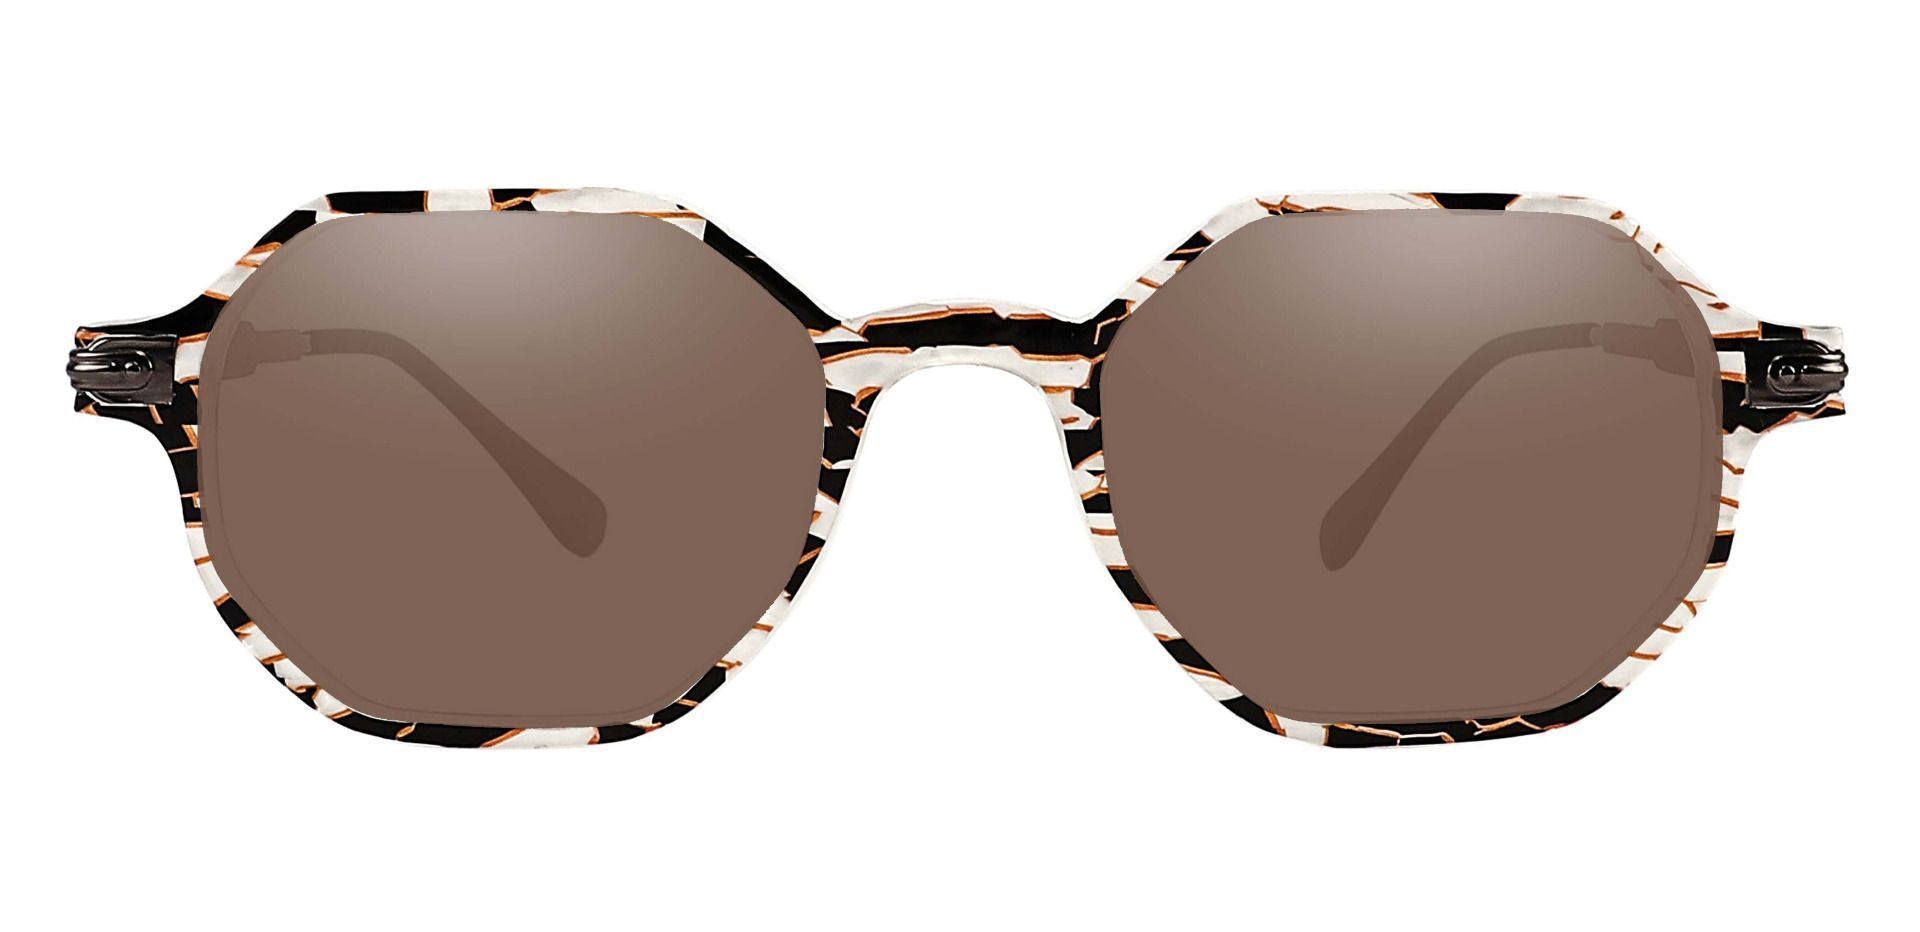 Bogart Geometric Progressive Sunglasses - Floral Frame With Brown Lenses